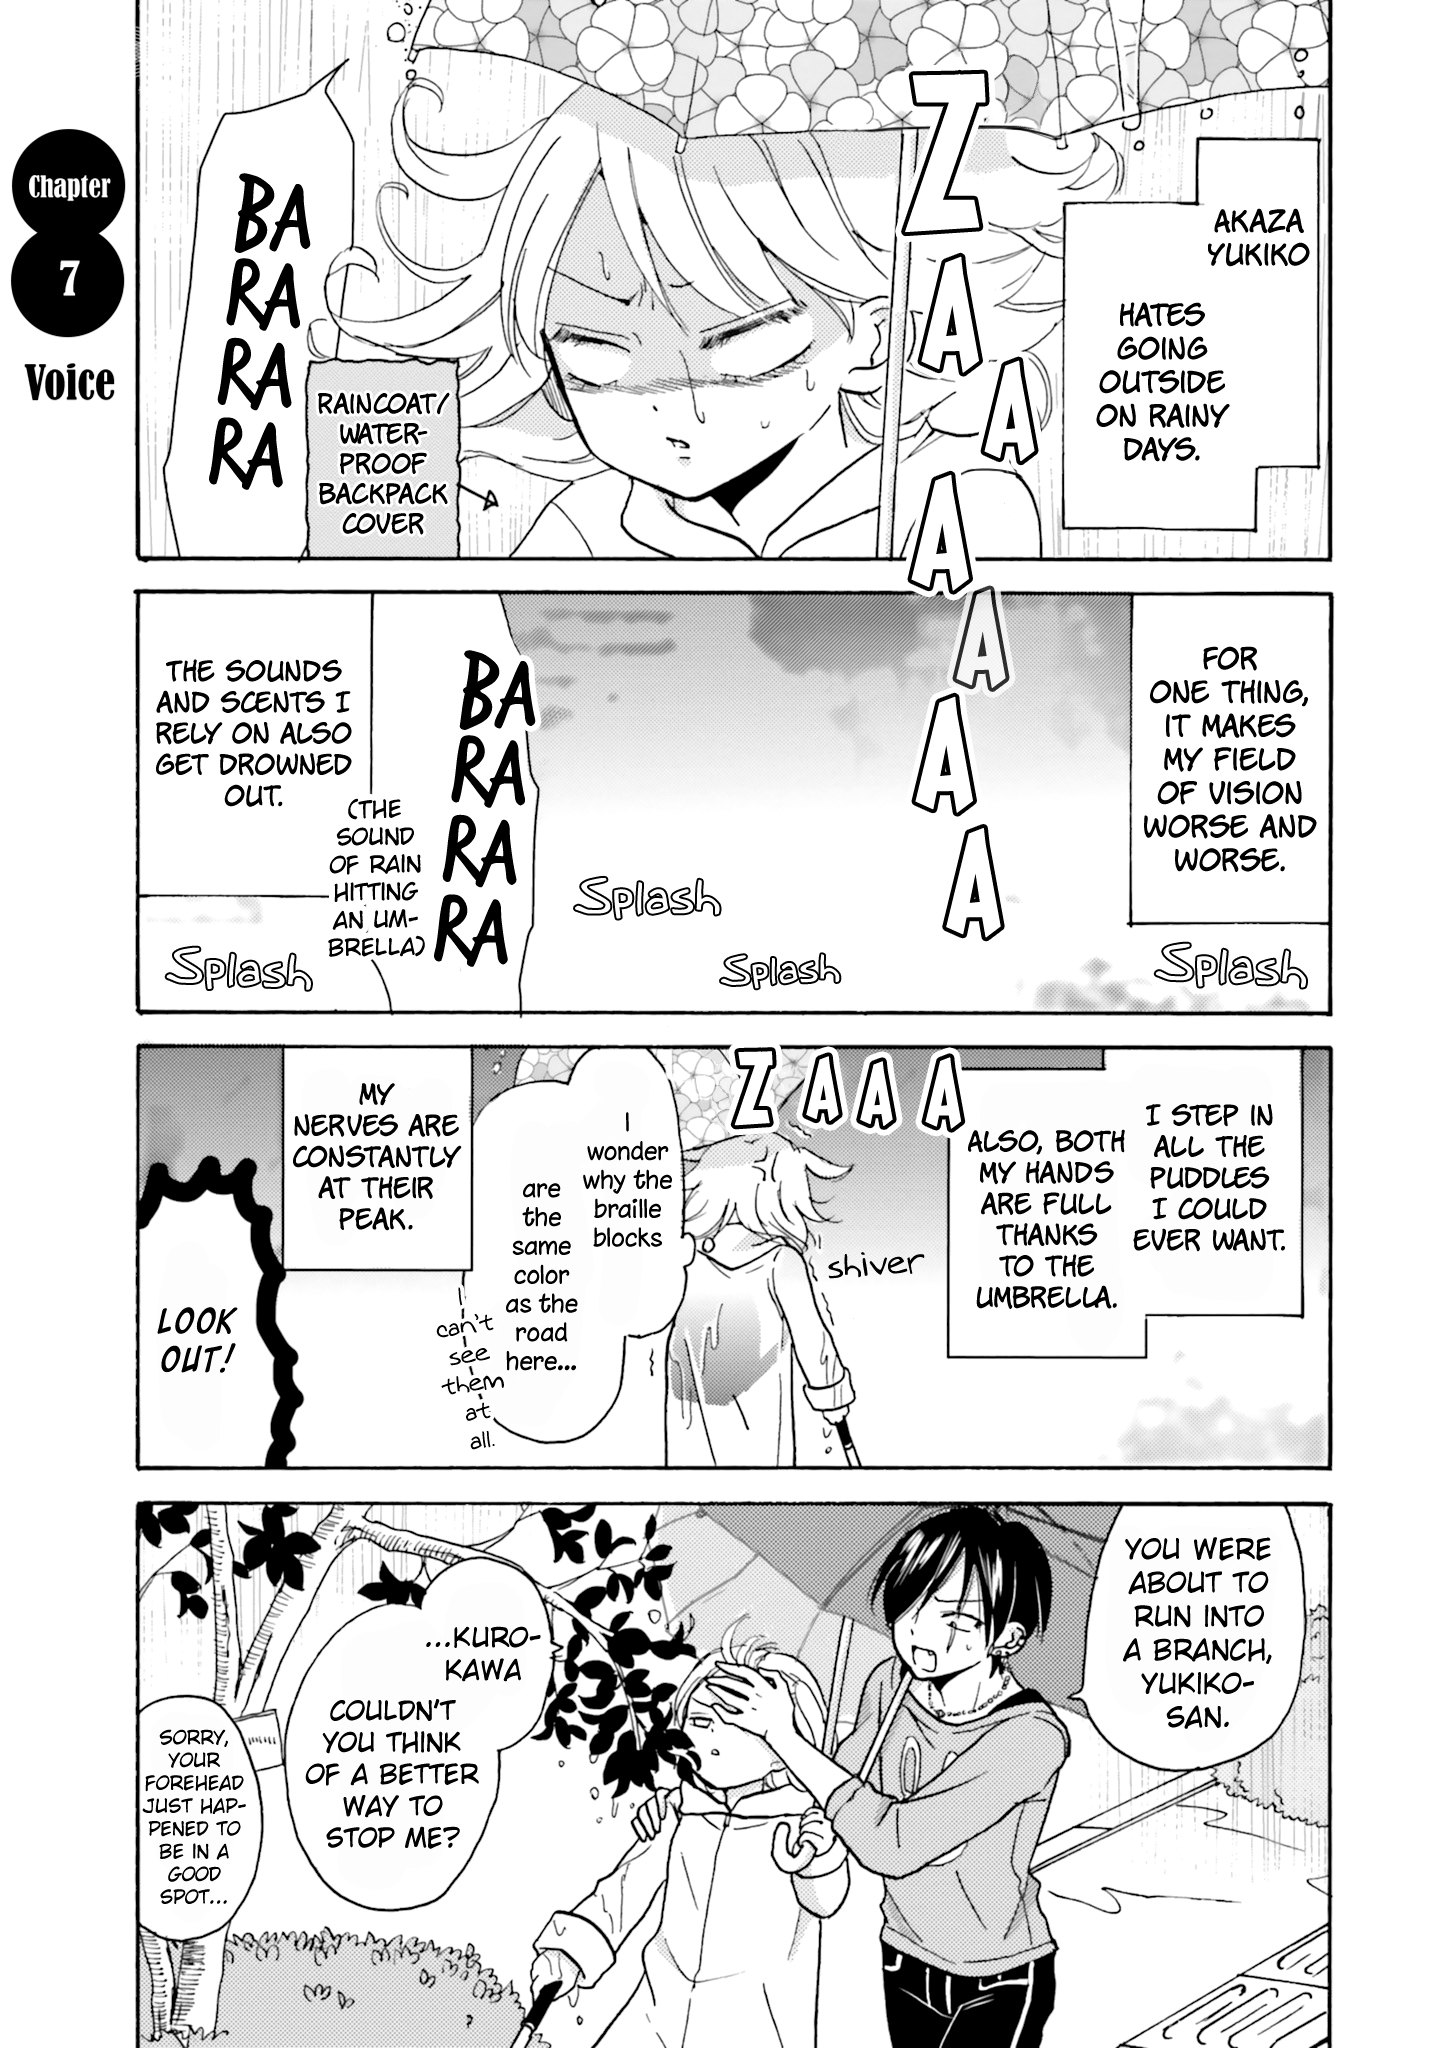 Yankee-Kun To Hakujou Gaaru - Page 2